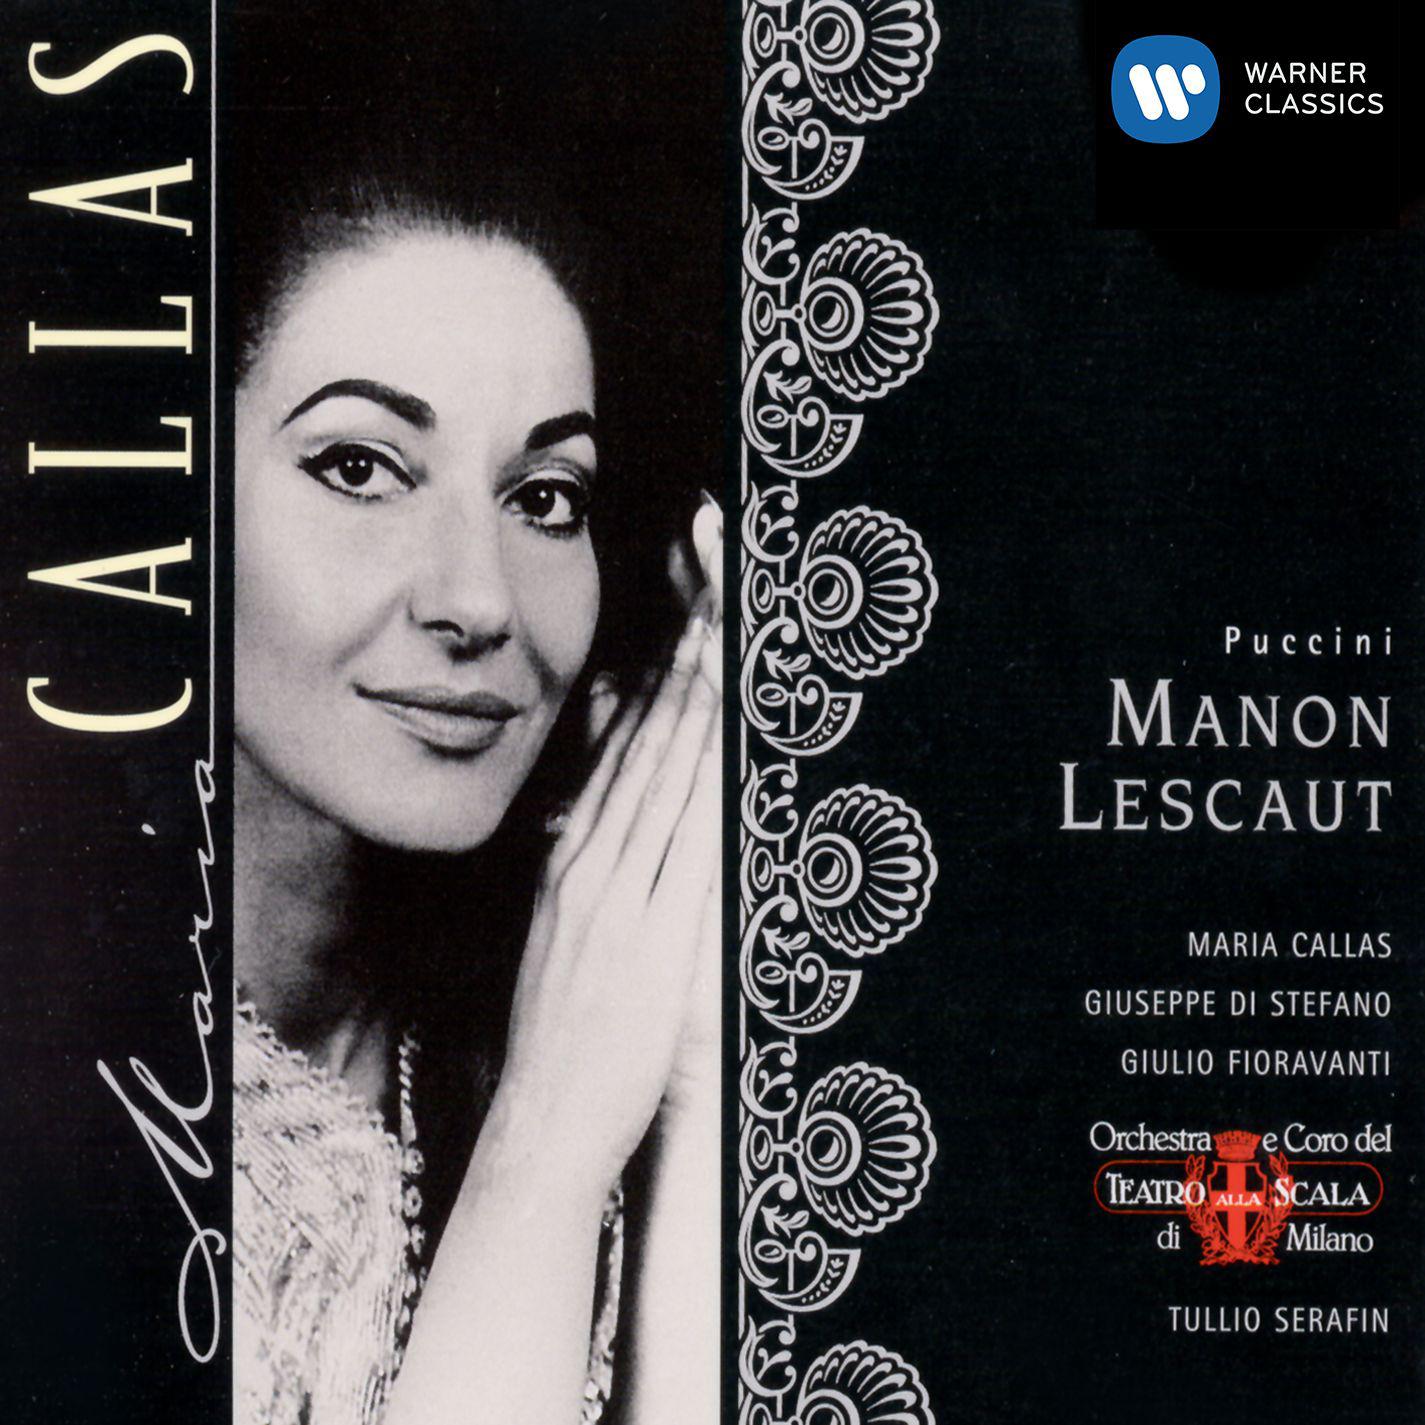 Manon Lescaut, Act II:"Oh, sarò la più bella!"